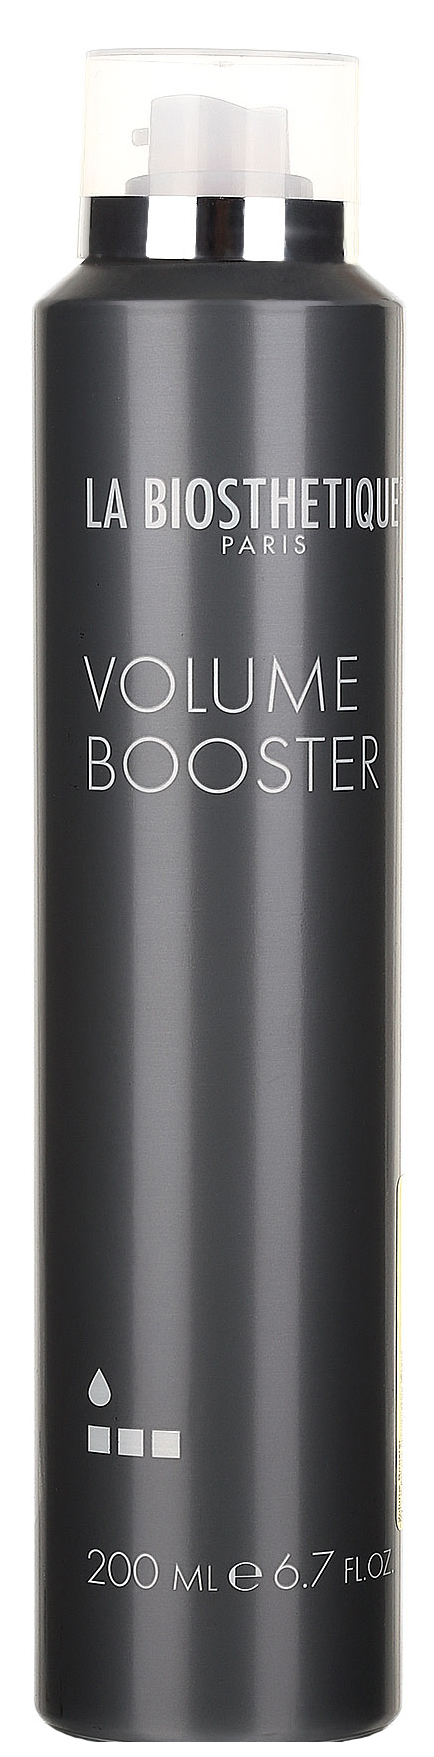 Мусс для волос La Biosthetique Base Volume Booster 200 мл wella shockwaves мусс для укладки волос volume суперсильной фиксации